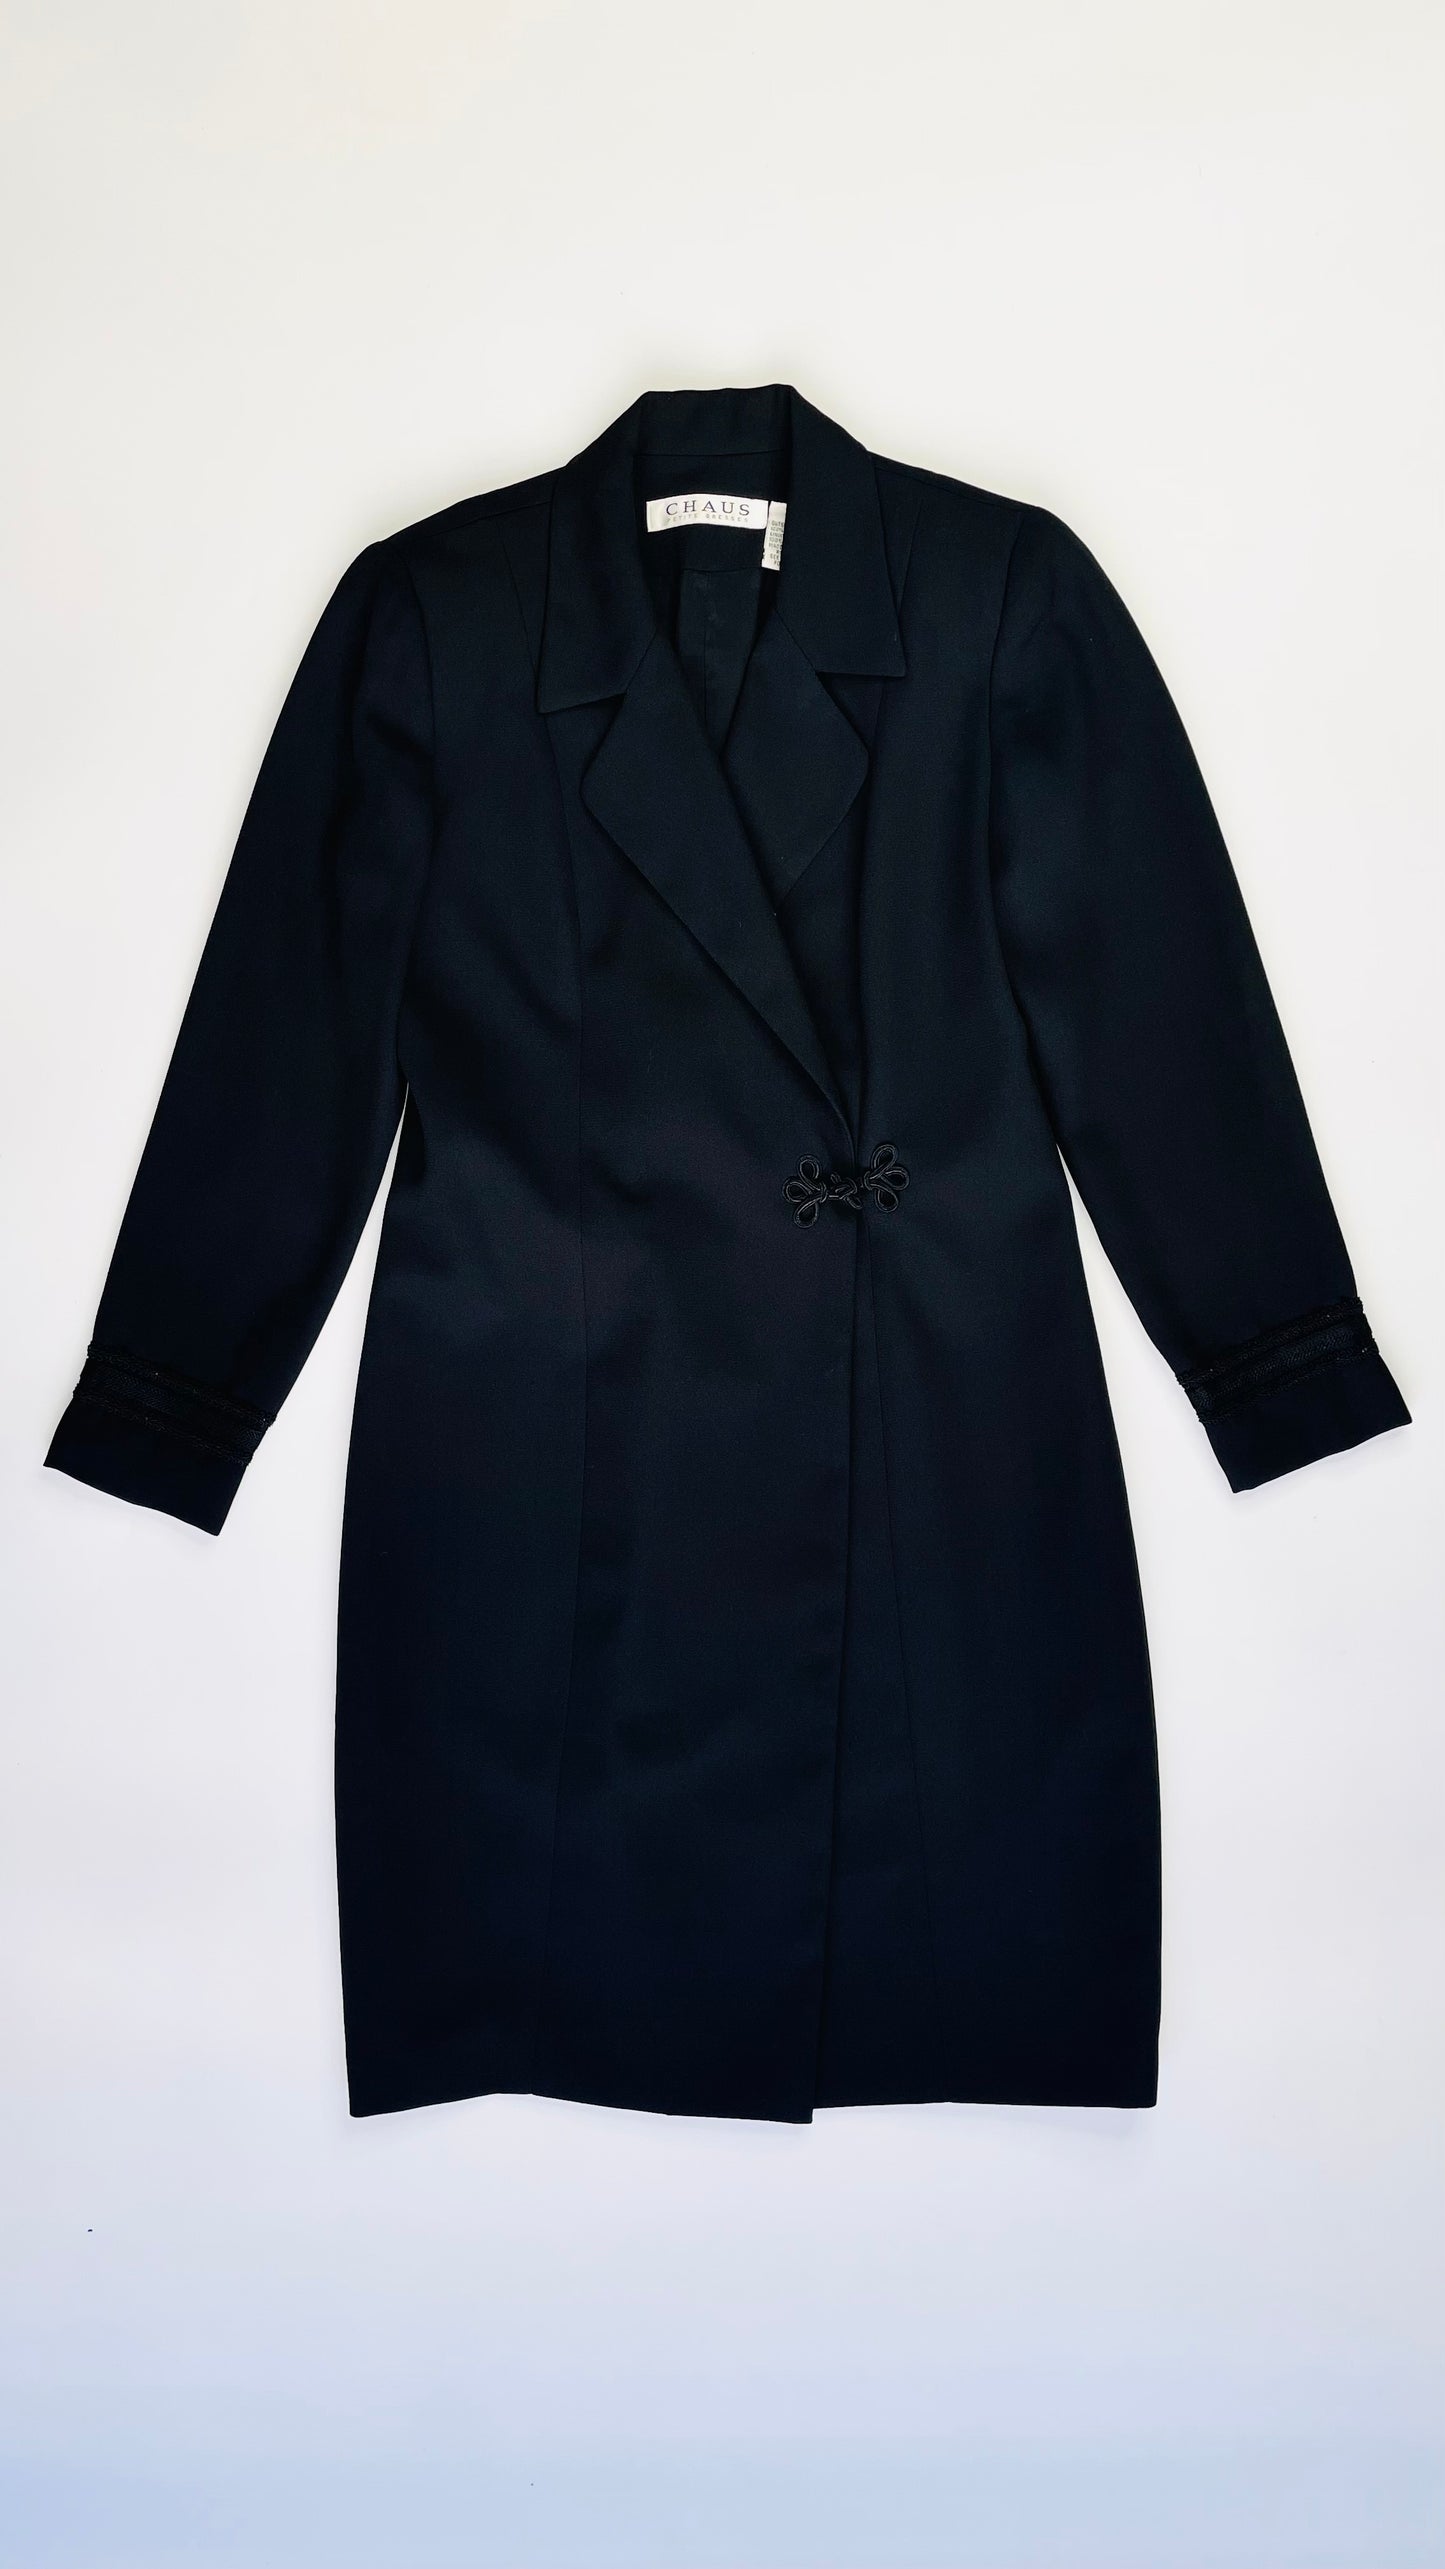 Vintage 80s black Chinoise blazer dress - Size 4